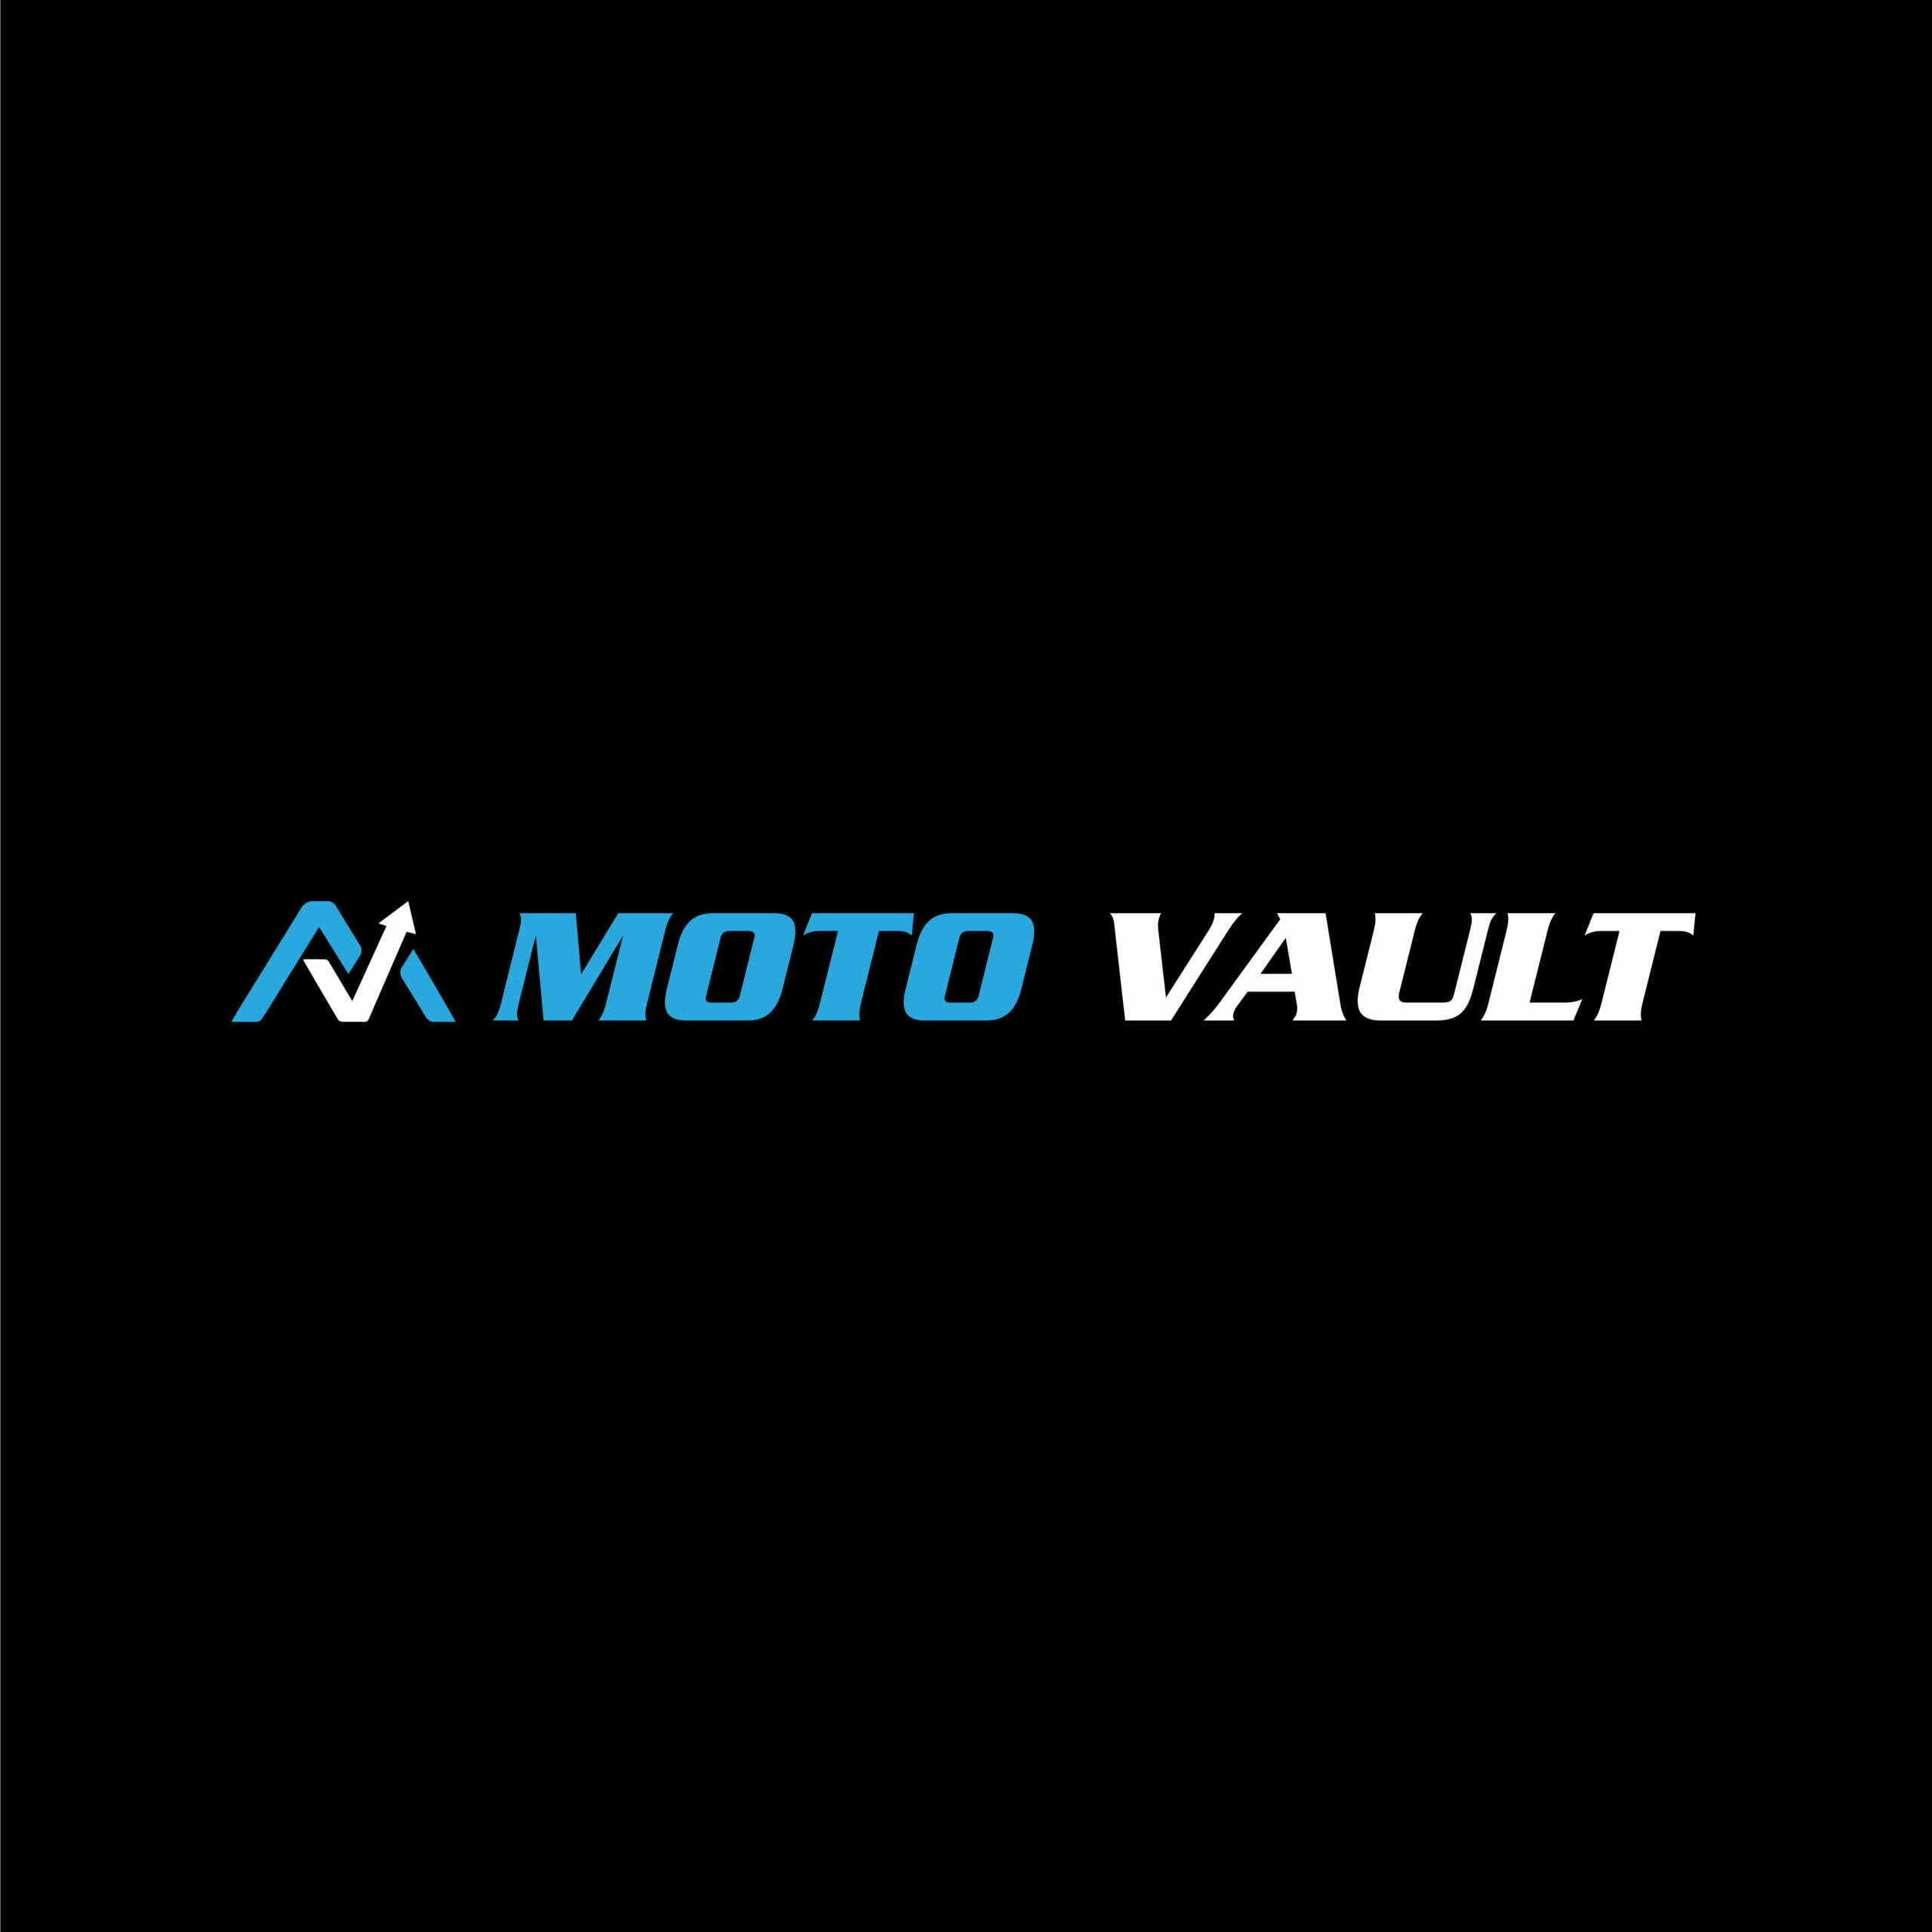 Moto Vault Multi Brand SuperBike Showroom To Have Many Brand! (2)